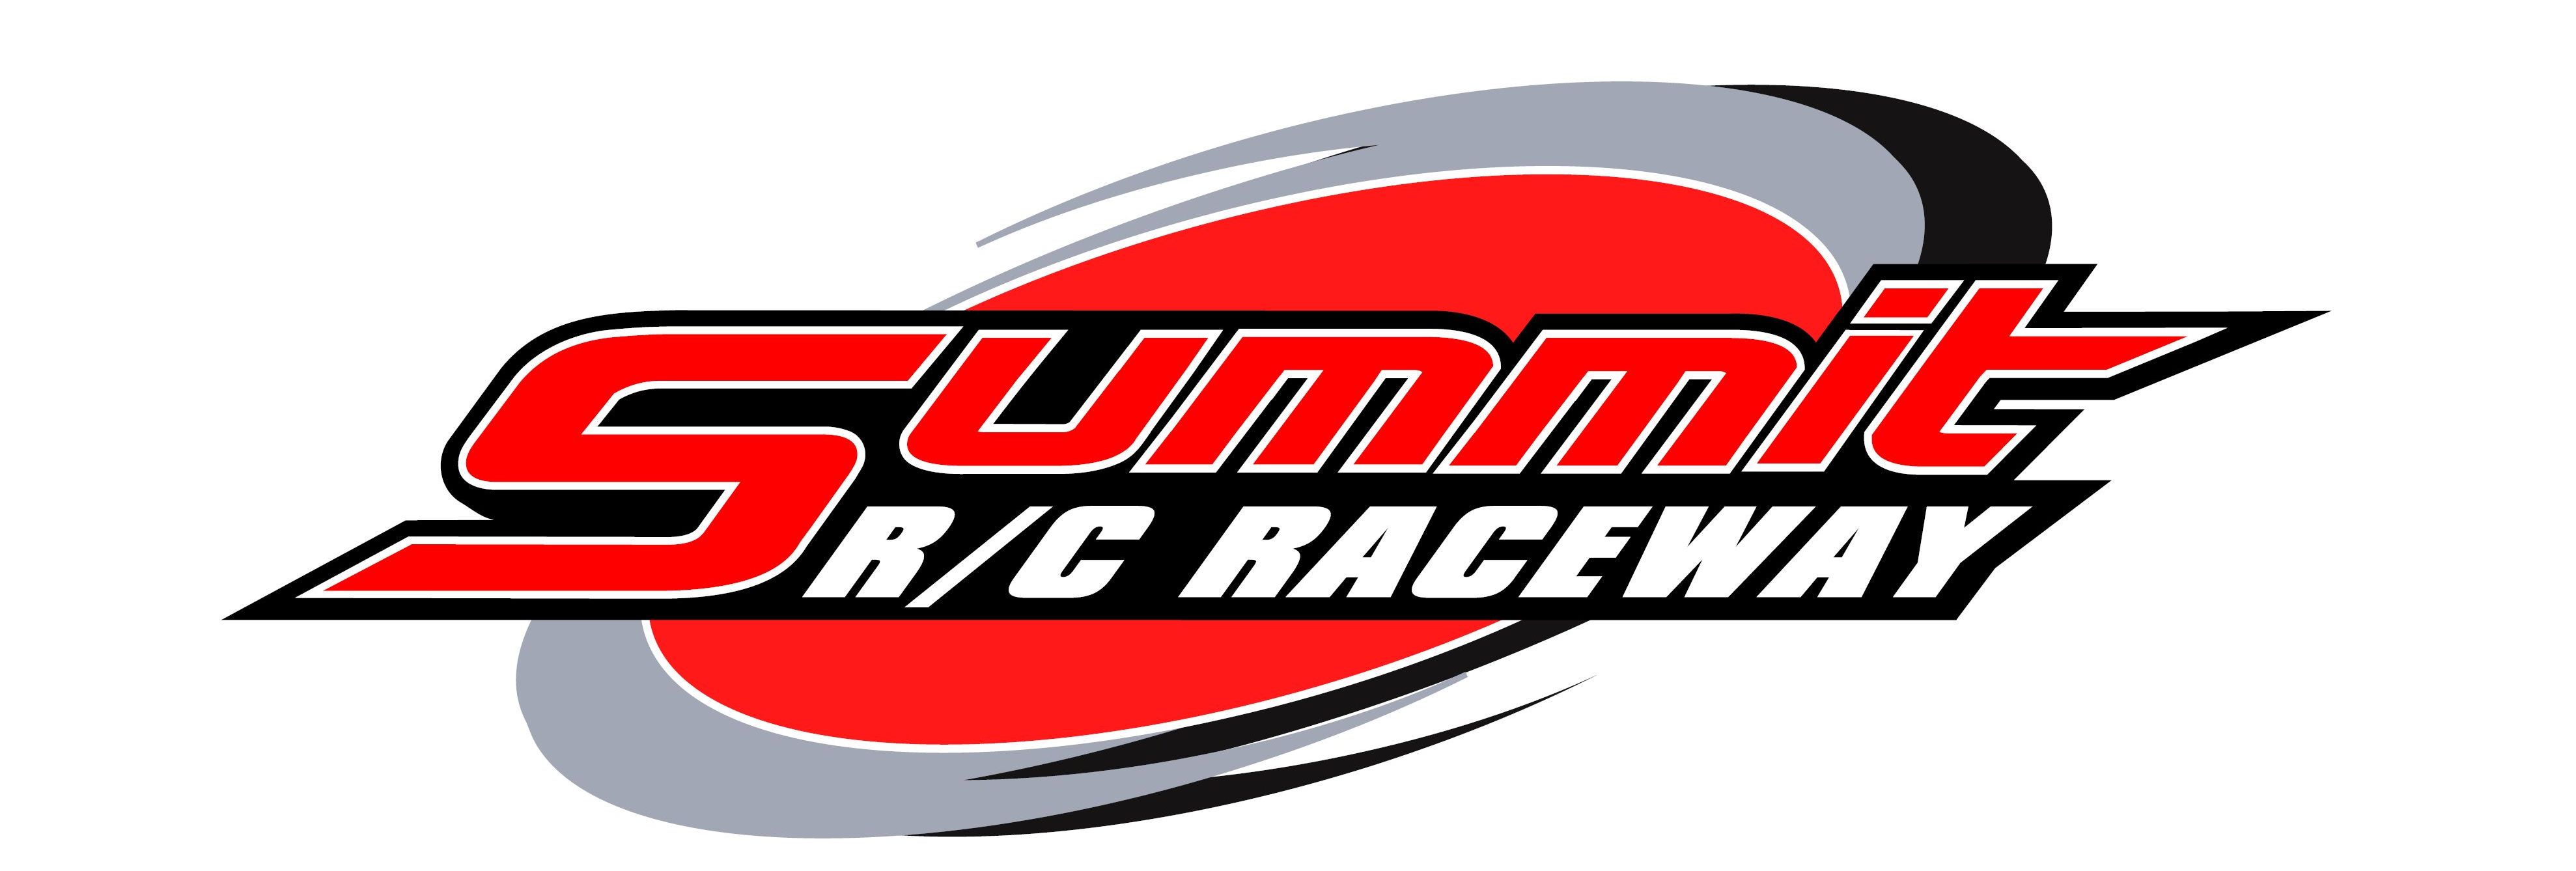 Racing Team Logos | Images Guru